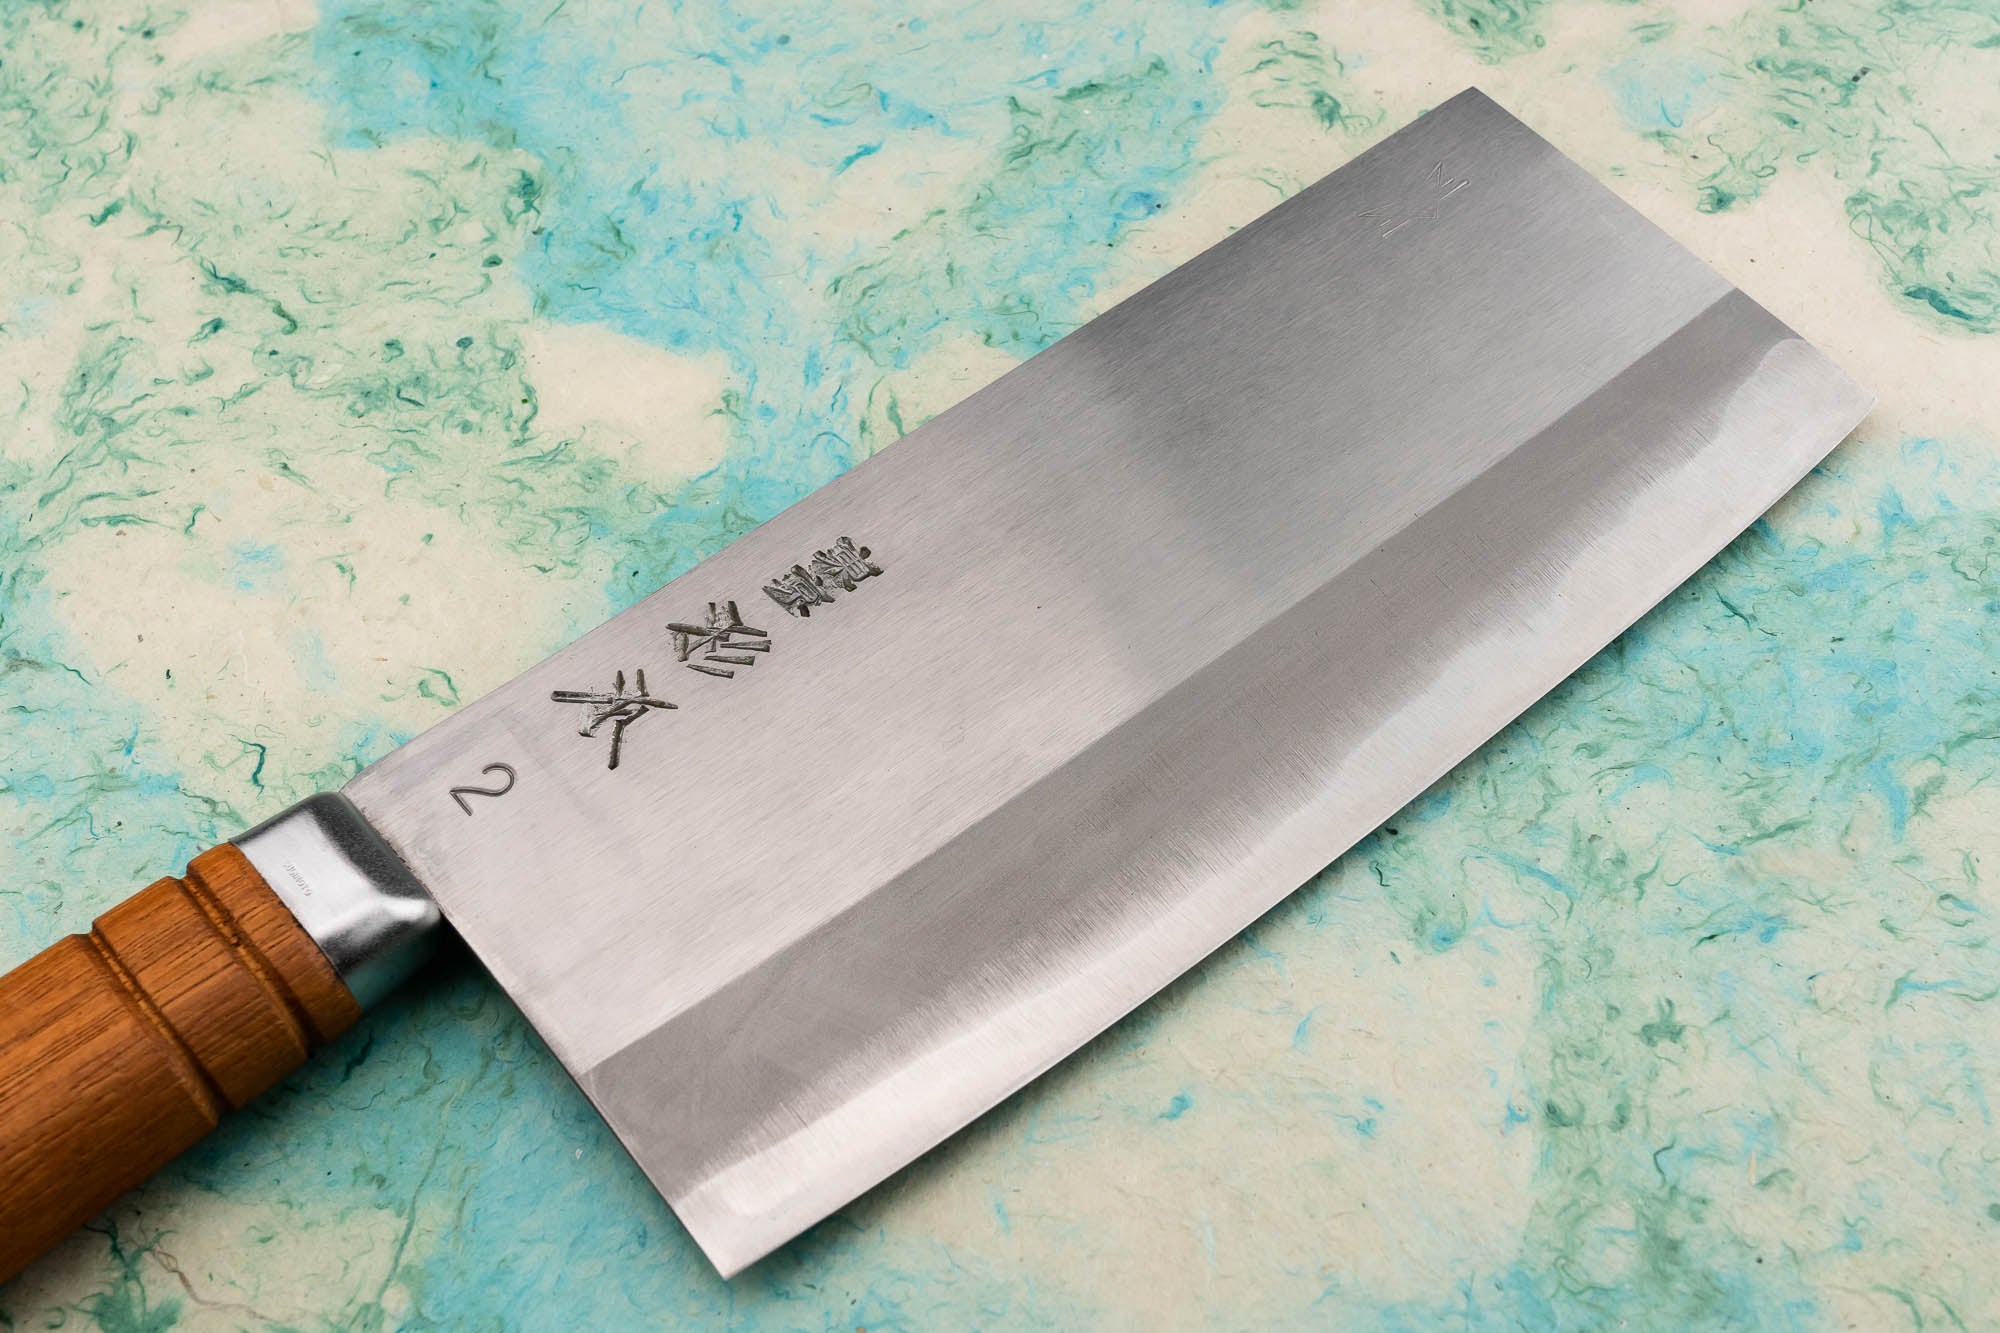 CCK Cleaver Kau Kong Chopper 205mm - KF1411  Knifewear - Handcrafted  Japanese Kitchen Knives